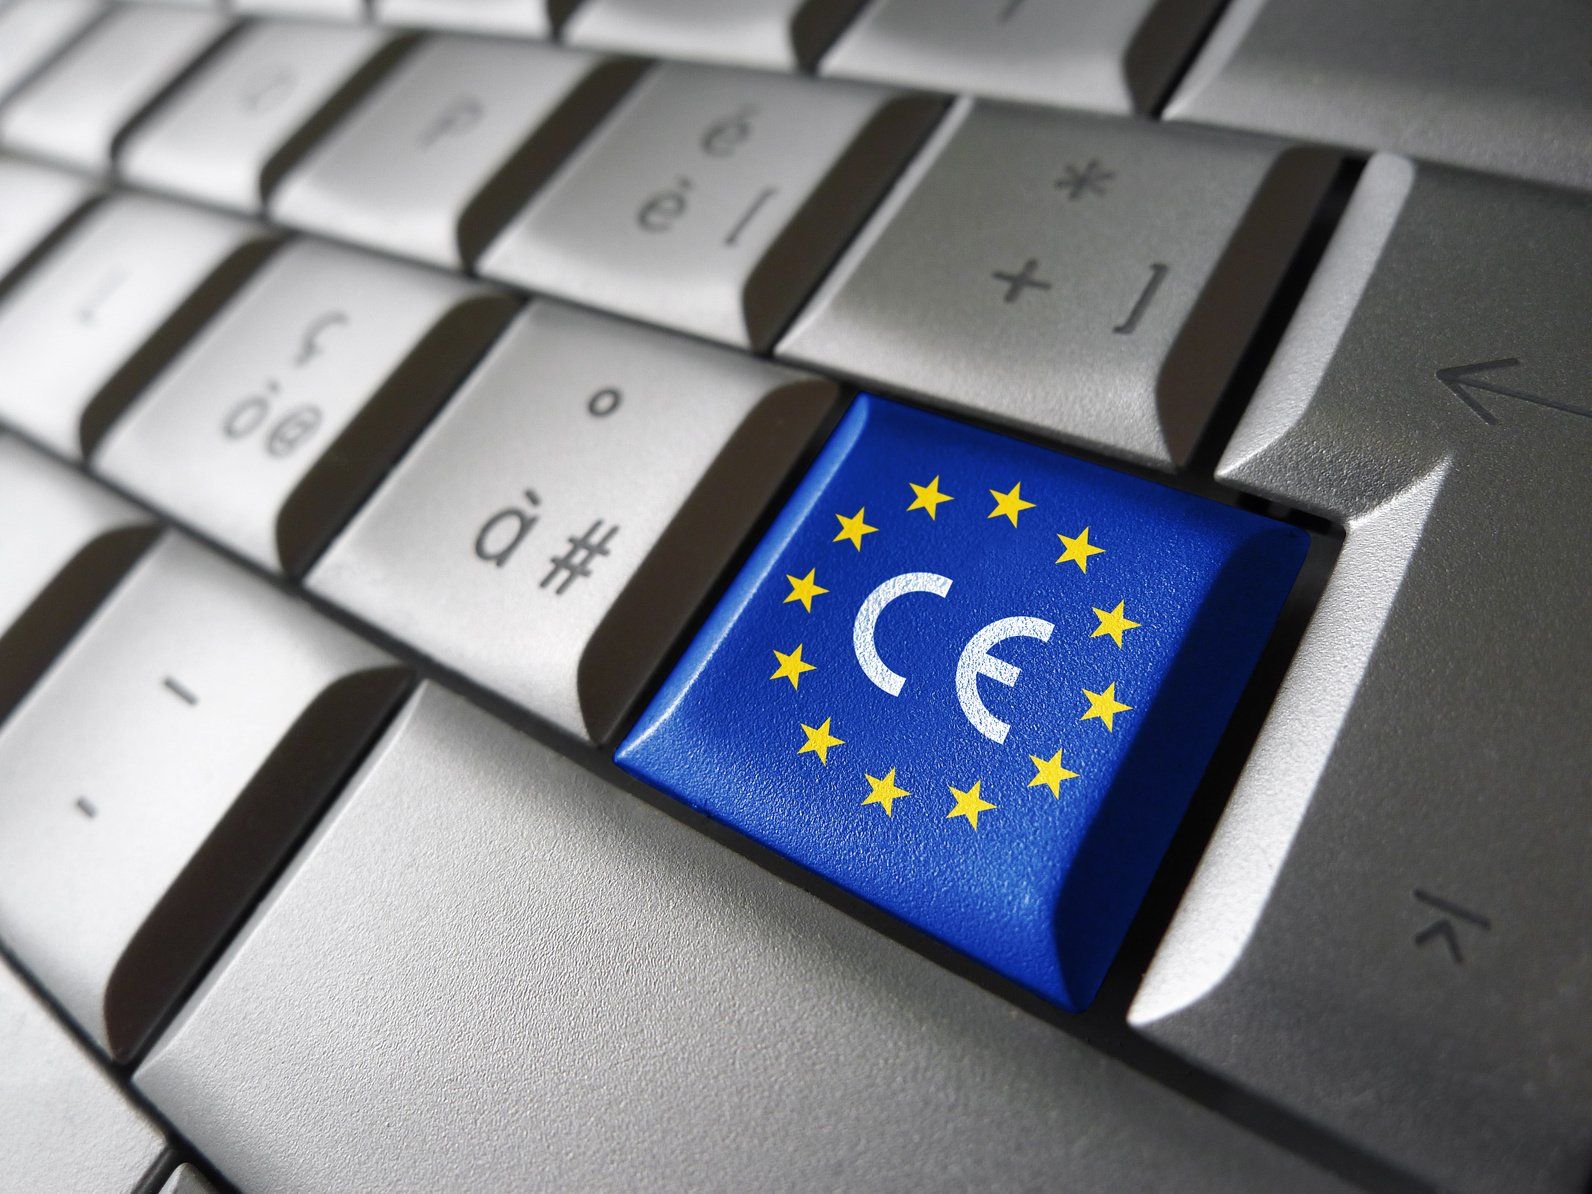 Keyboard with European Union Flag CE Marking